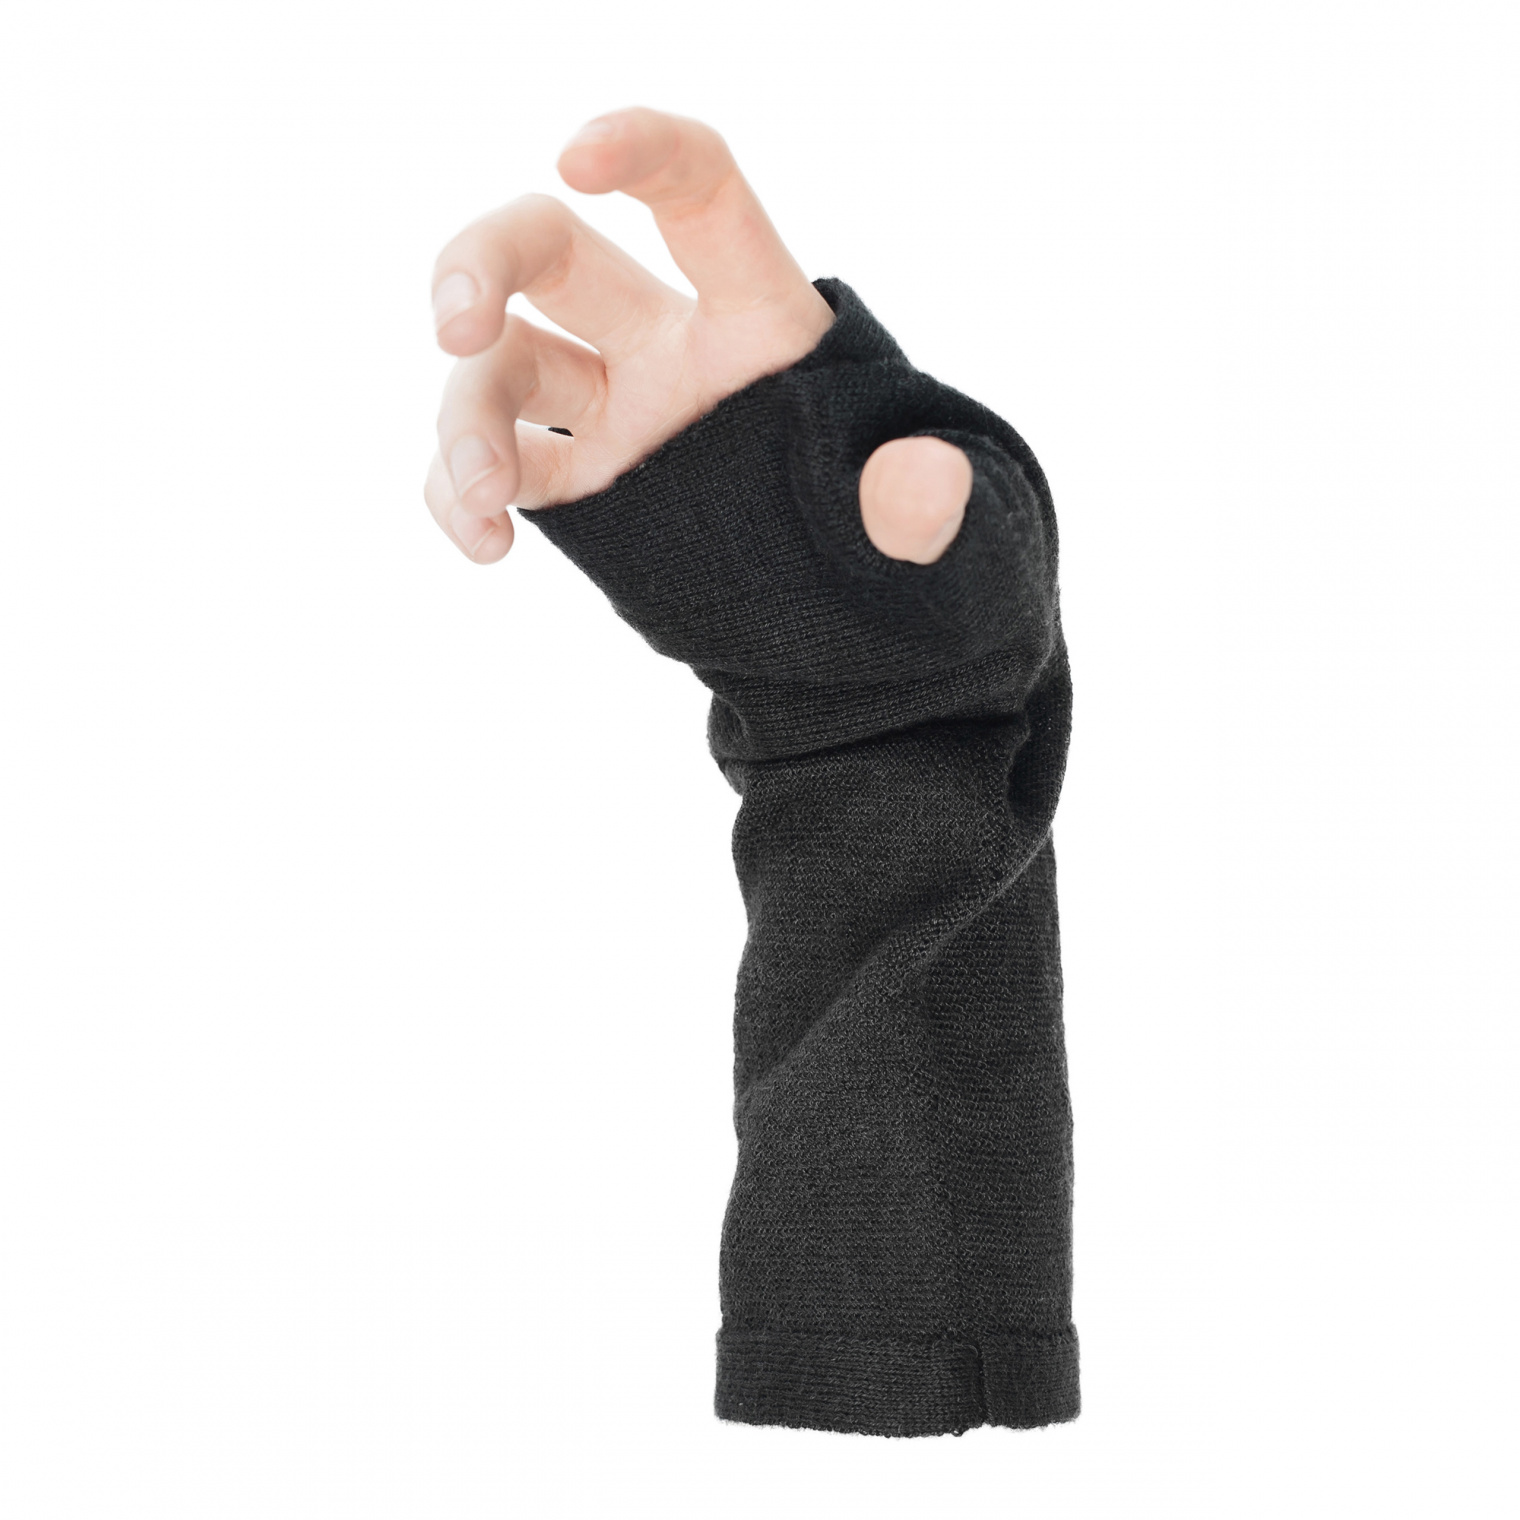 Acronym Black HG1-AK Gloves